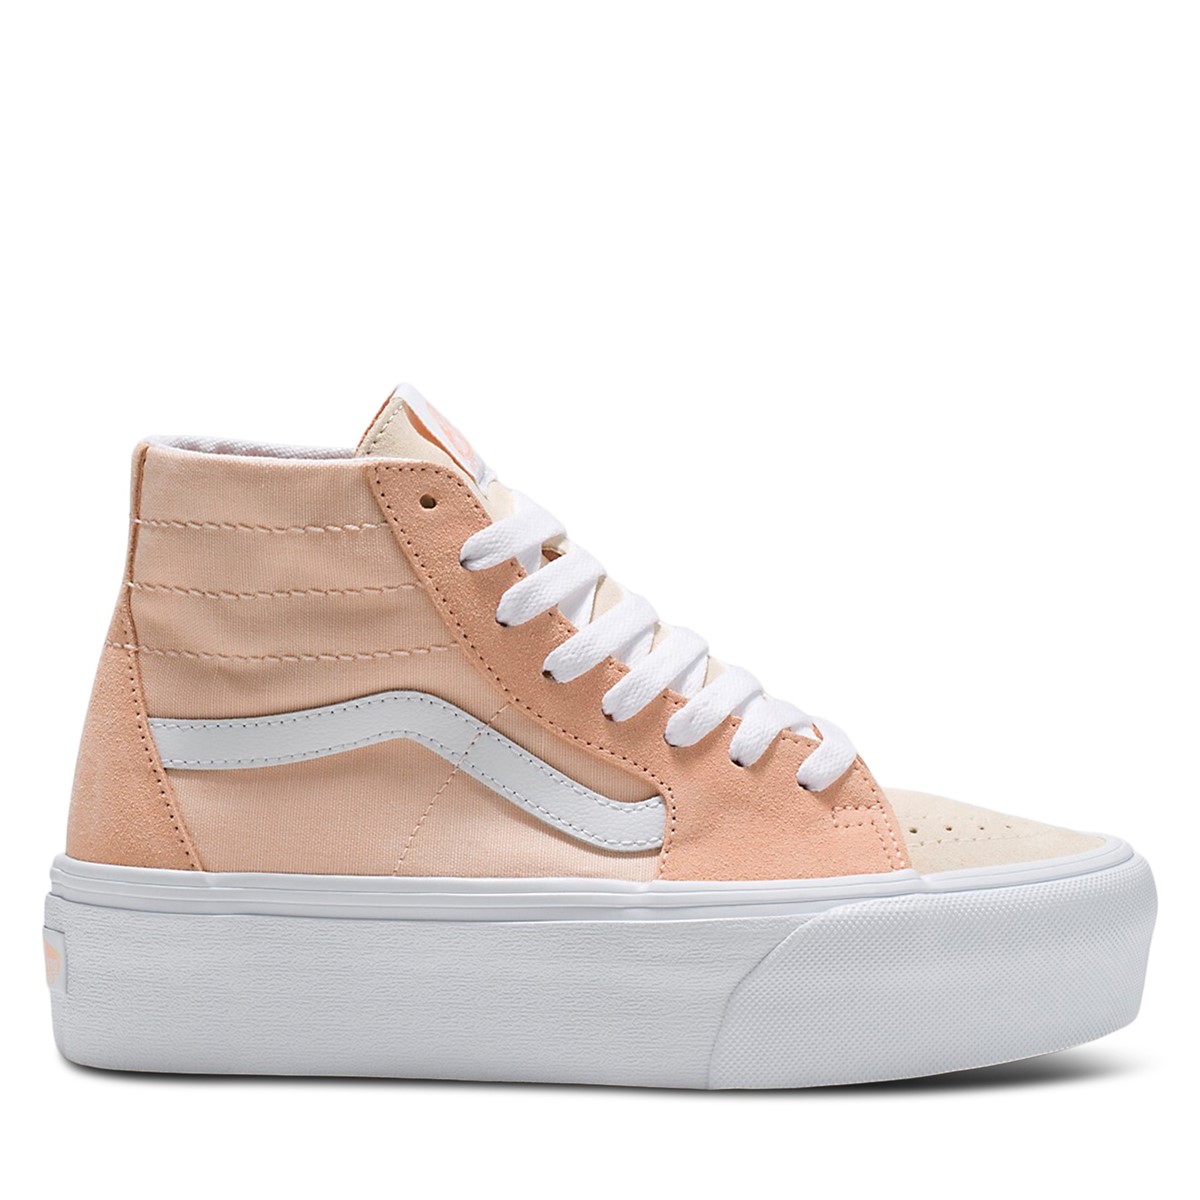 Color Block SK8-Hi Tapered Platform Sneakers in Peach/White